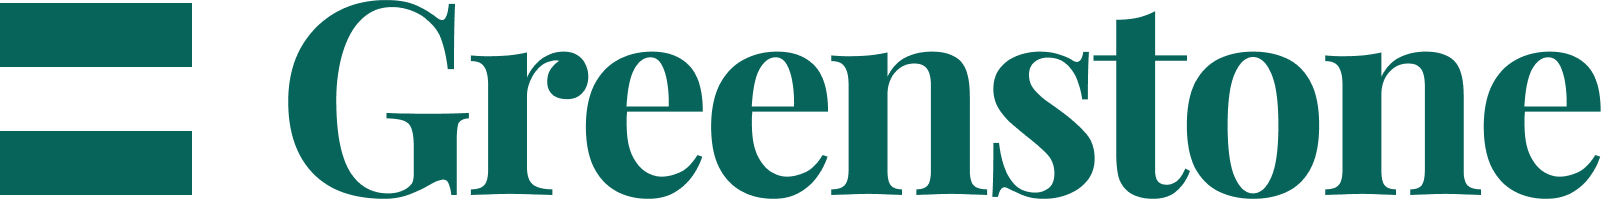 Greenstone logo P03